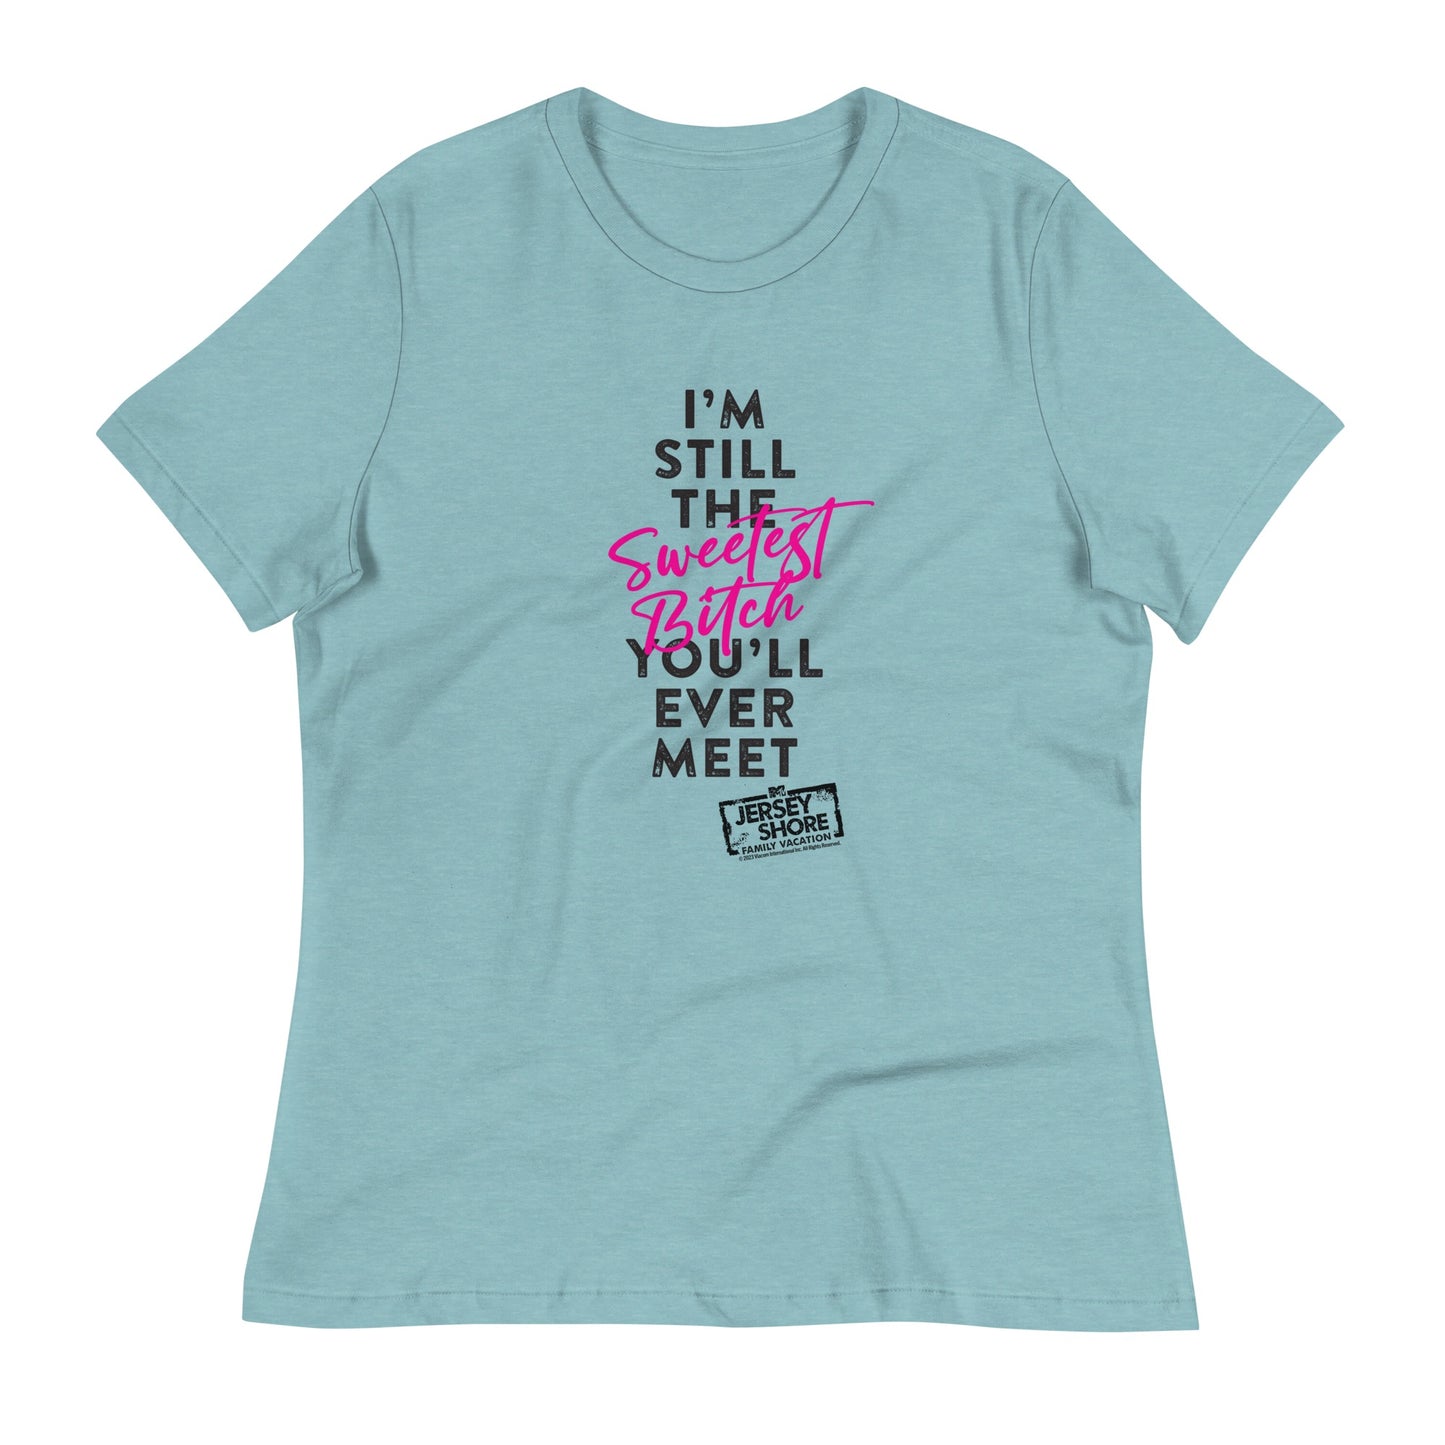 Jersey Shore Family Vacation T-shirt "I'm Still the Sweetest" (Je suis toujours la plus belle)